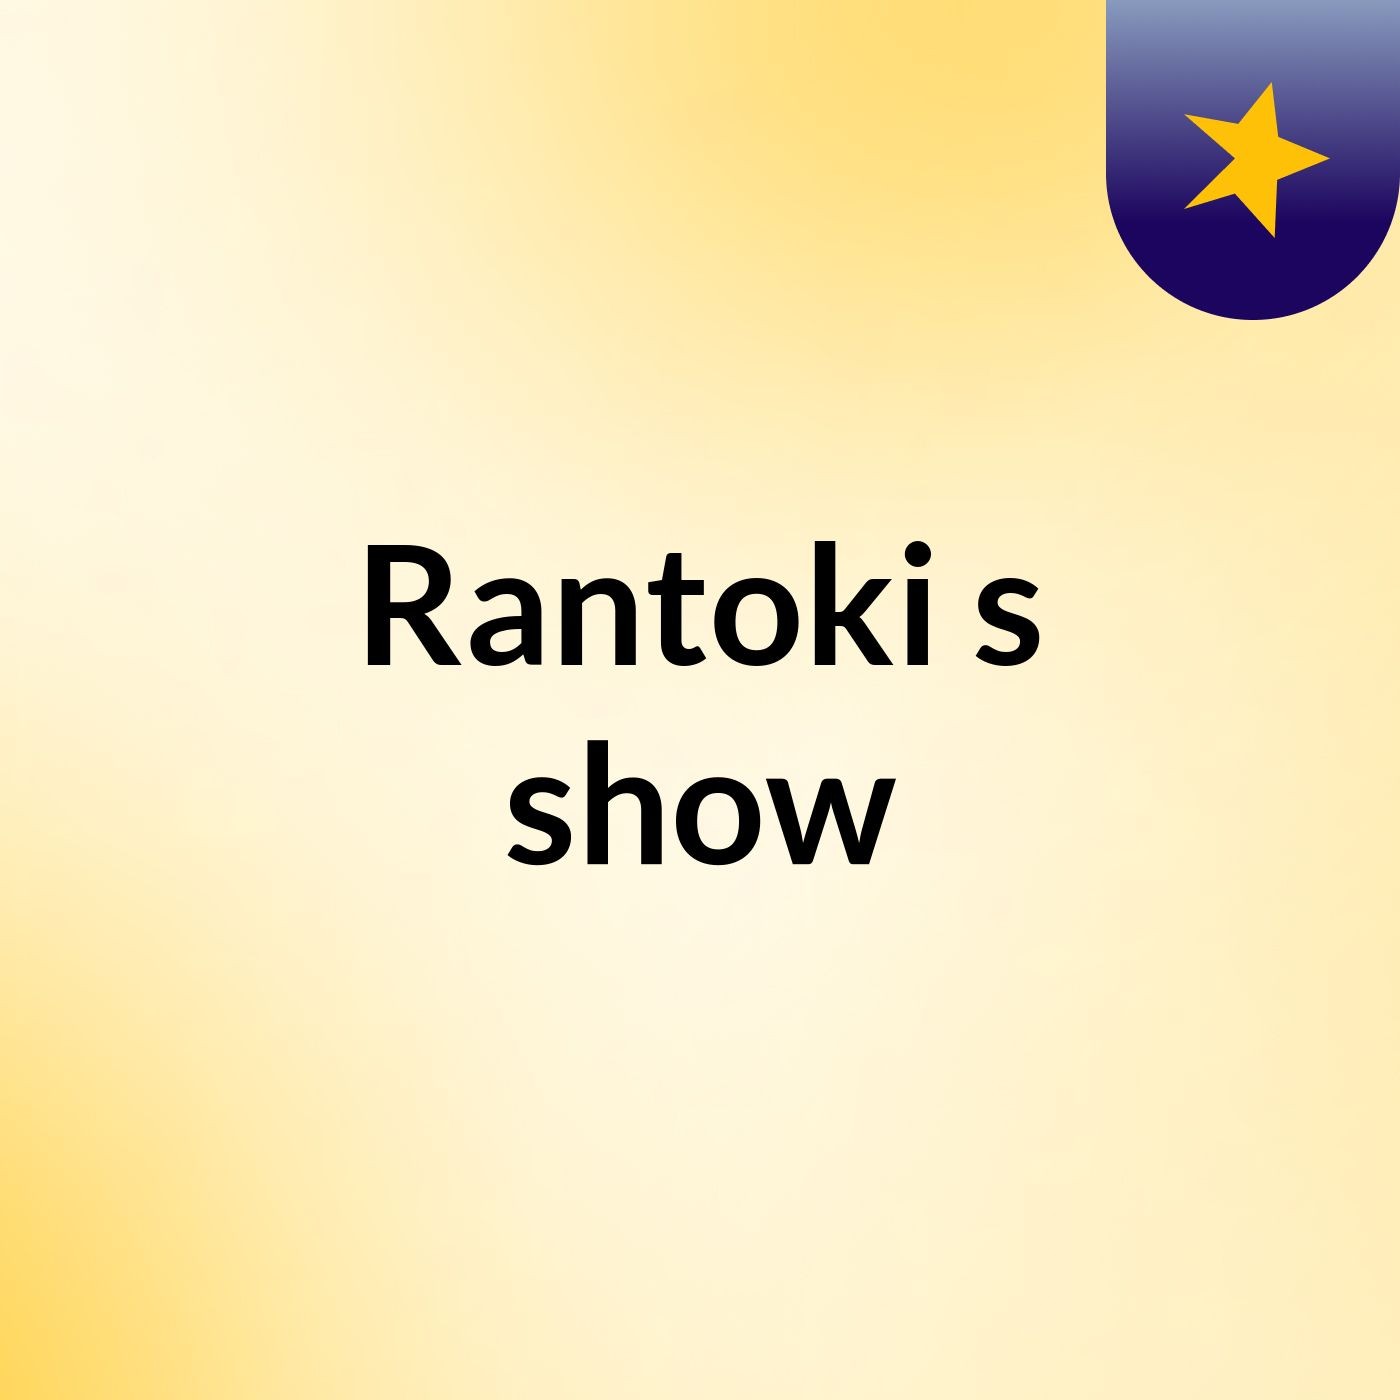 Rantoki's show